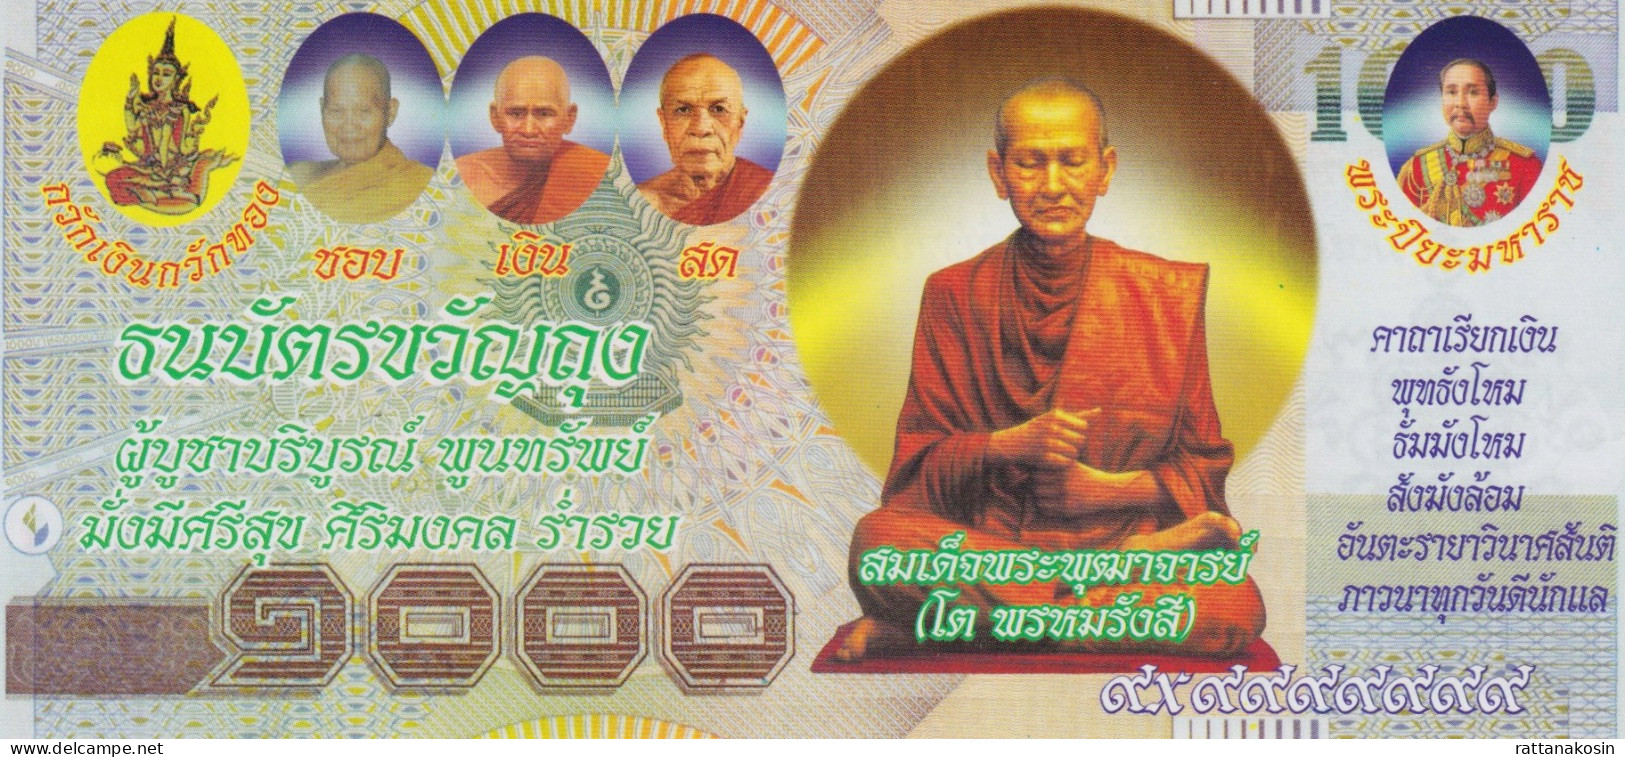 THAILAND TEMPLE BANKNOTE NLP 1000 BAHT  ND   UNC. - Thailand